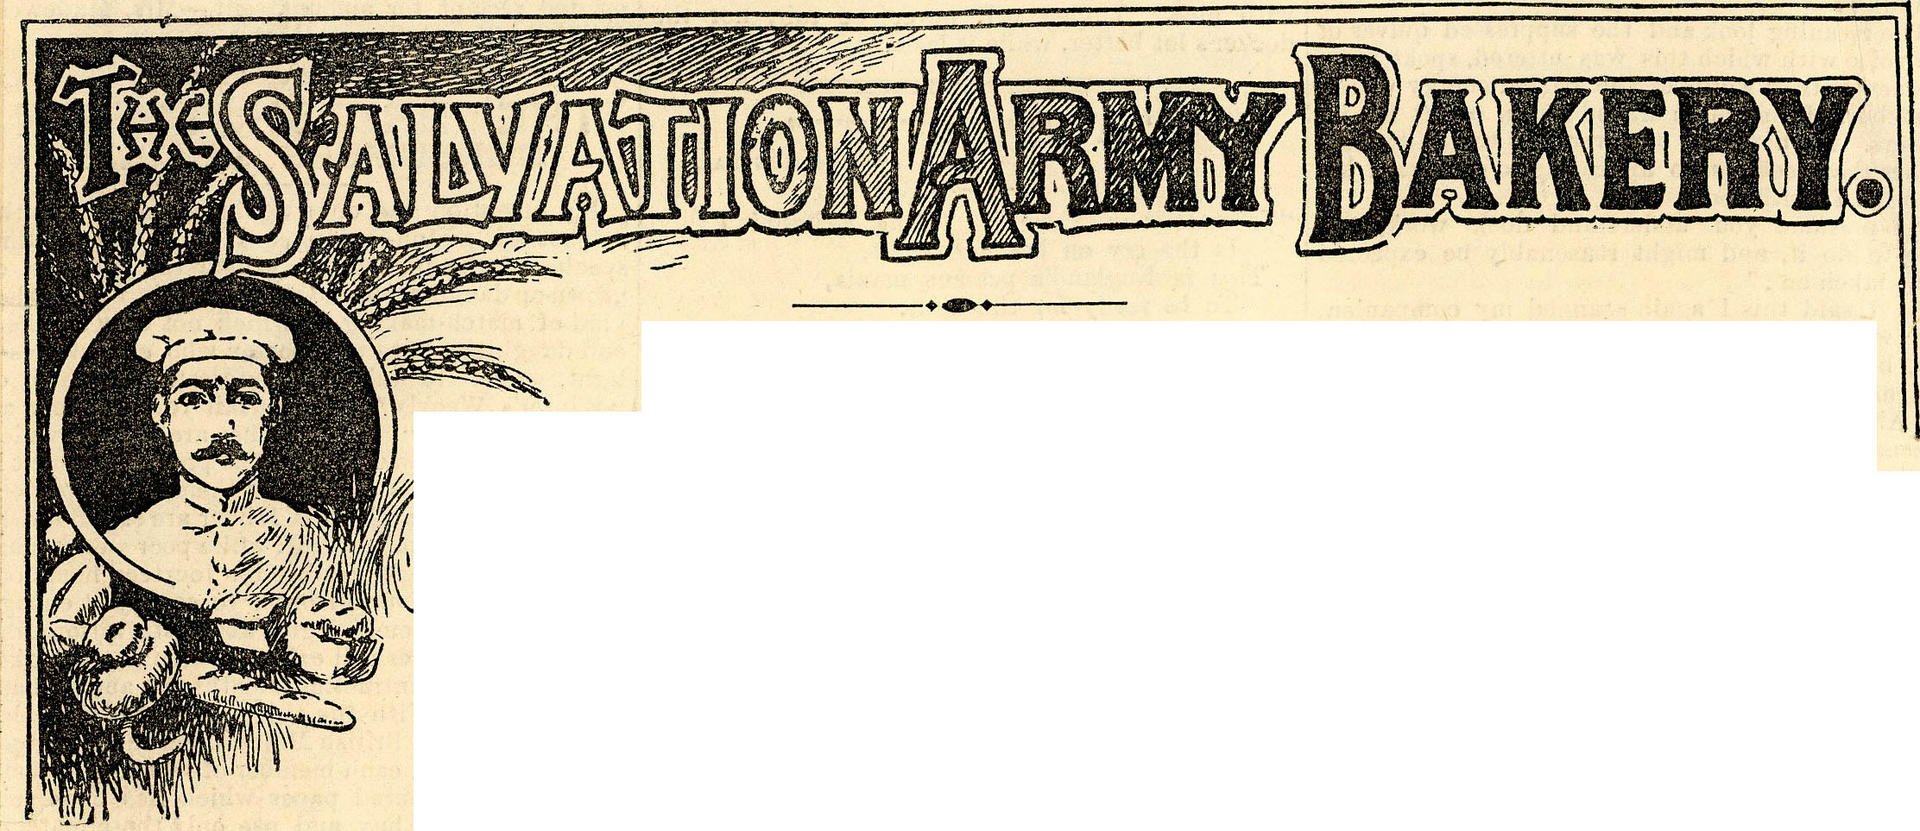 The Salvation Army Bakery header from The Darkest England Gazette, 1894